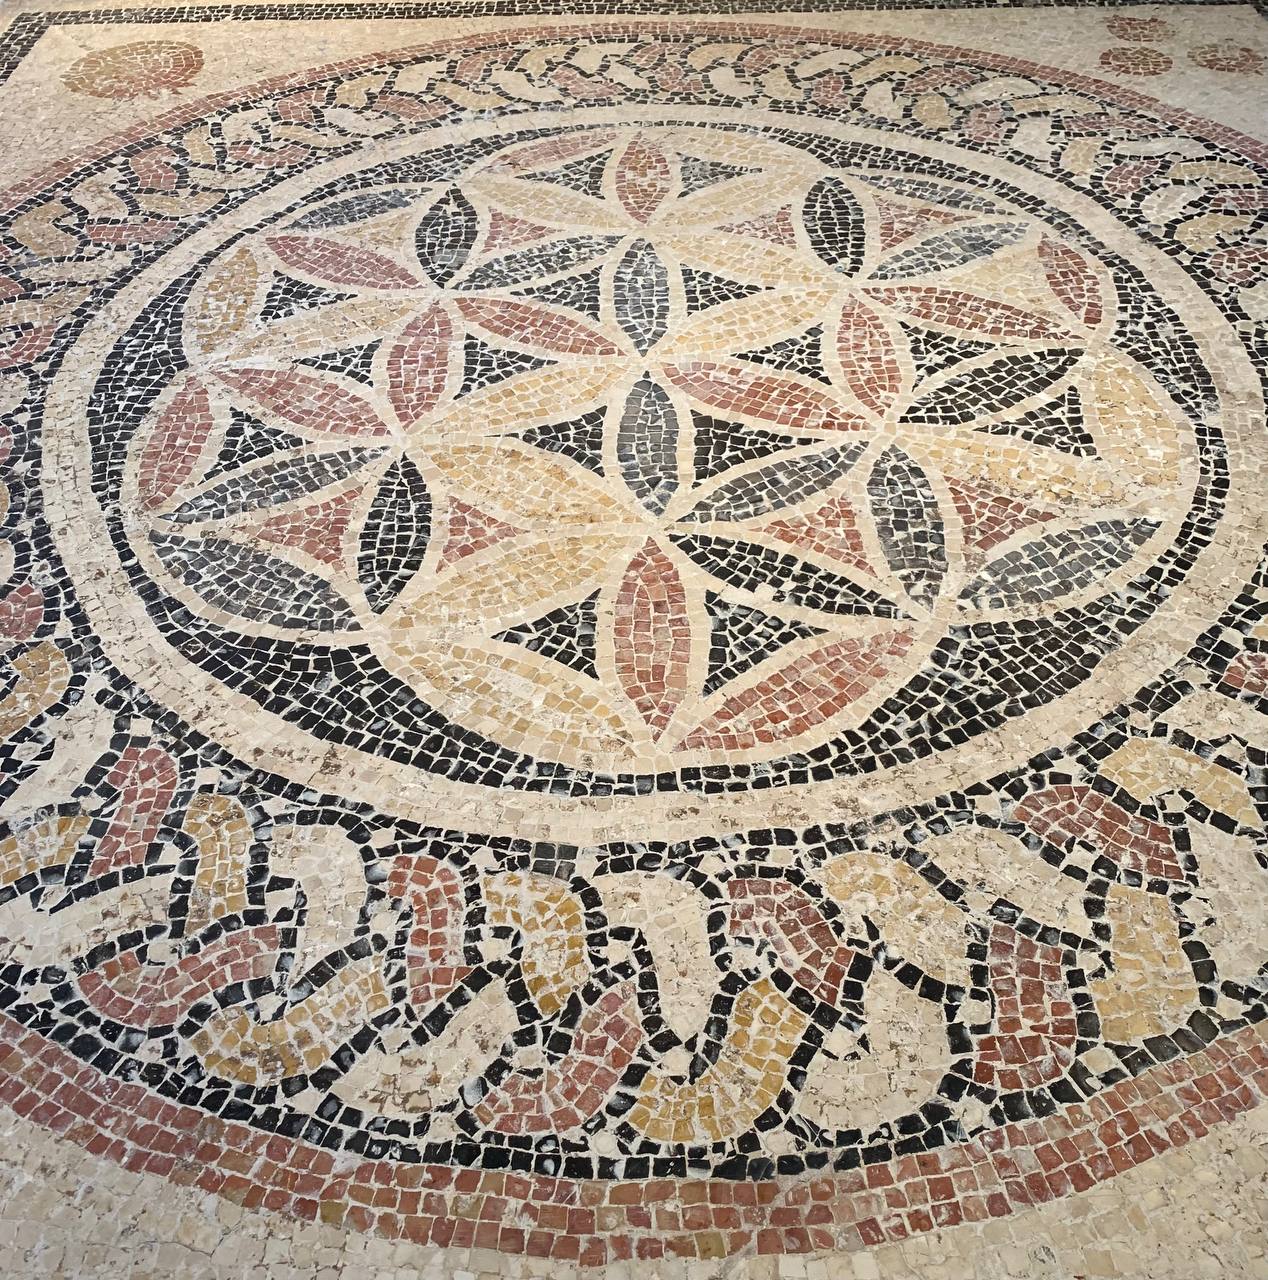 Мозаика-паттерн «Цветок Жизни», найденный в Израиле.JPG